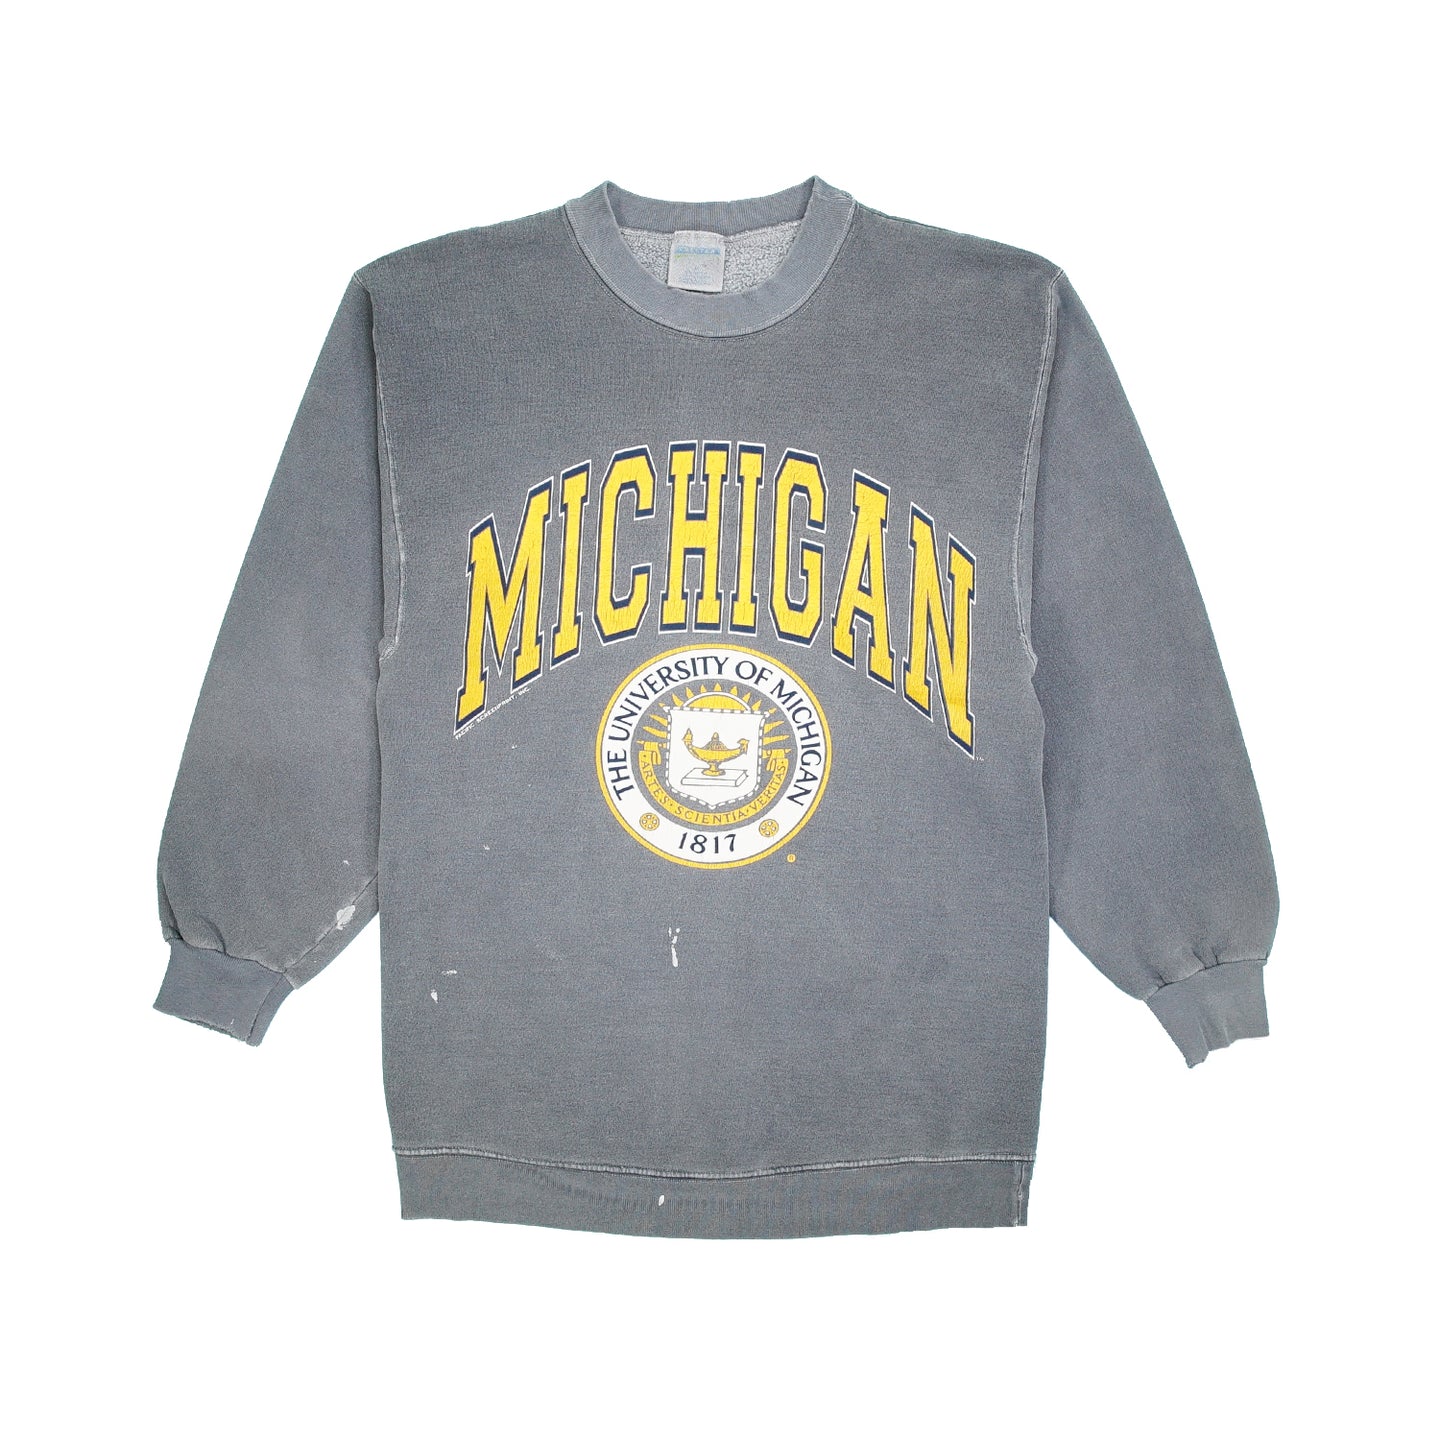 Vintage University of Michigan faded crewneck M